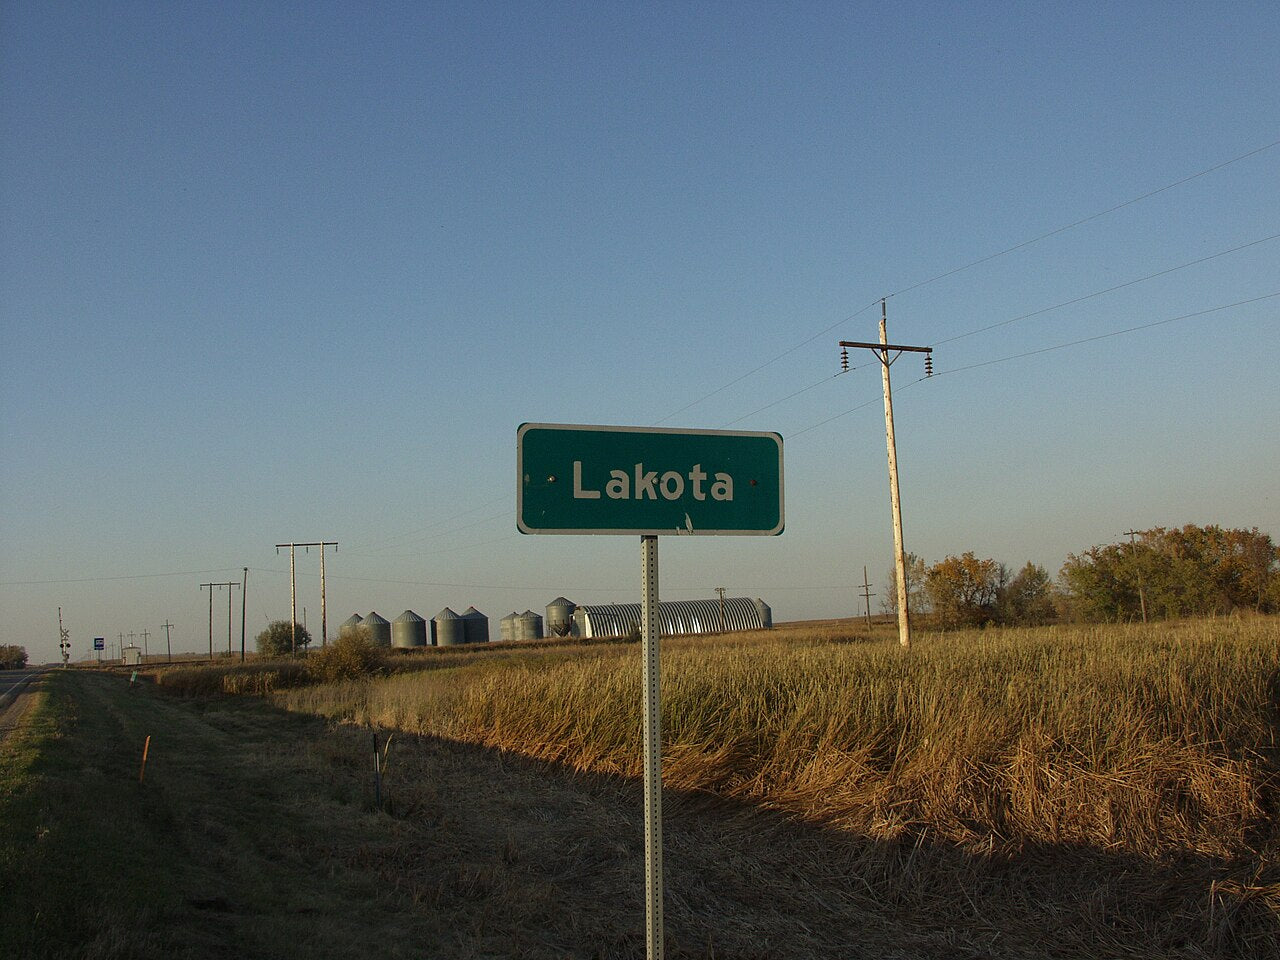 Haus and Hues in Lakota